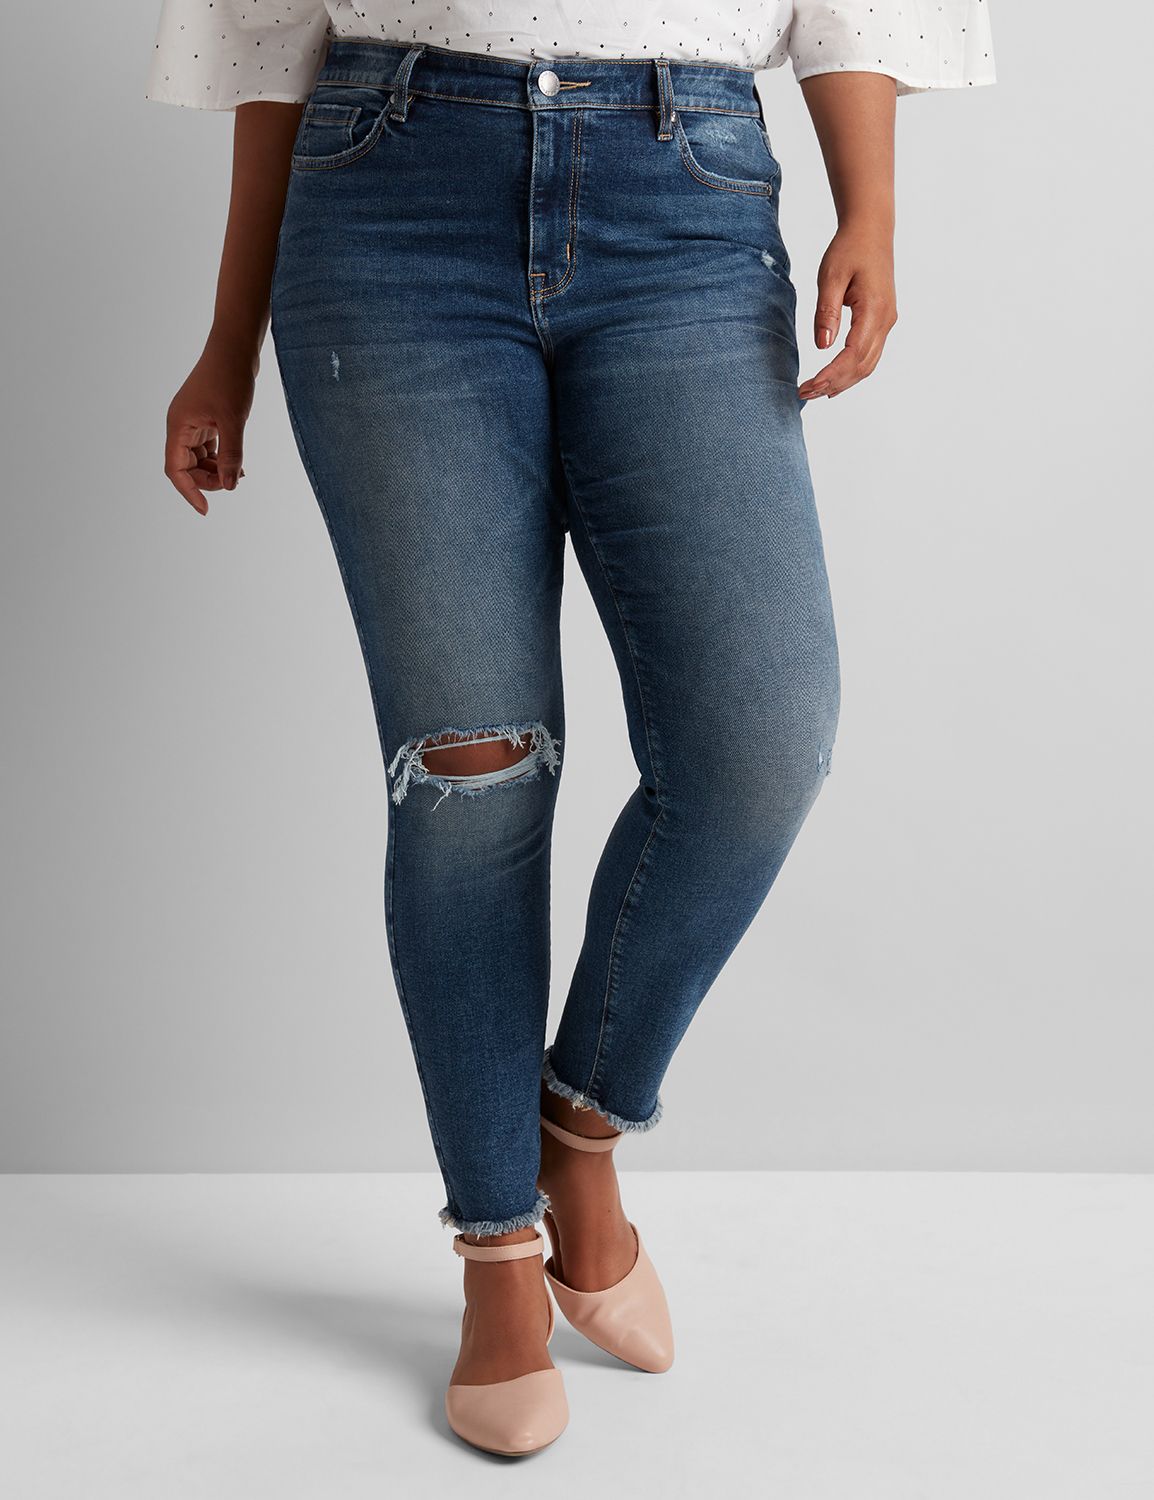 lane bryant ankle jeans